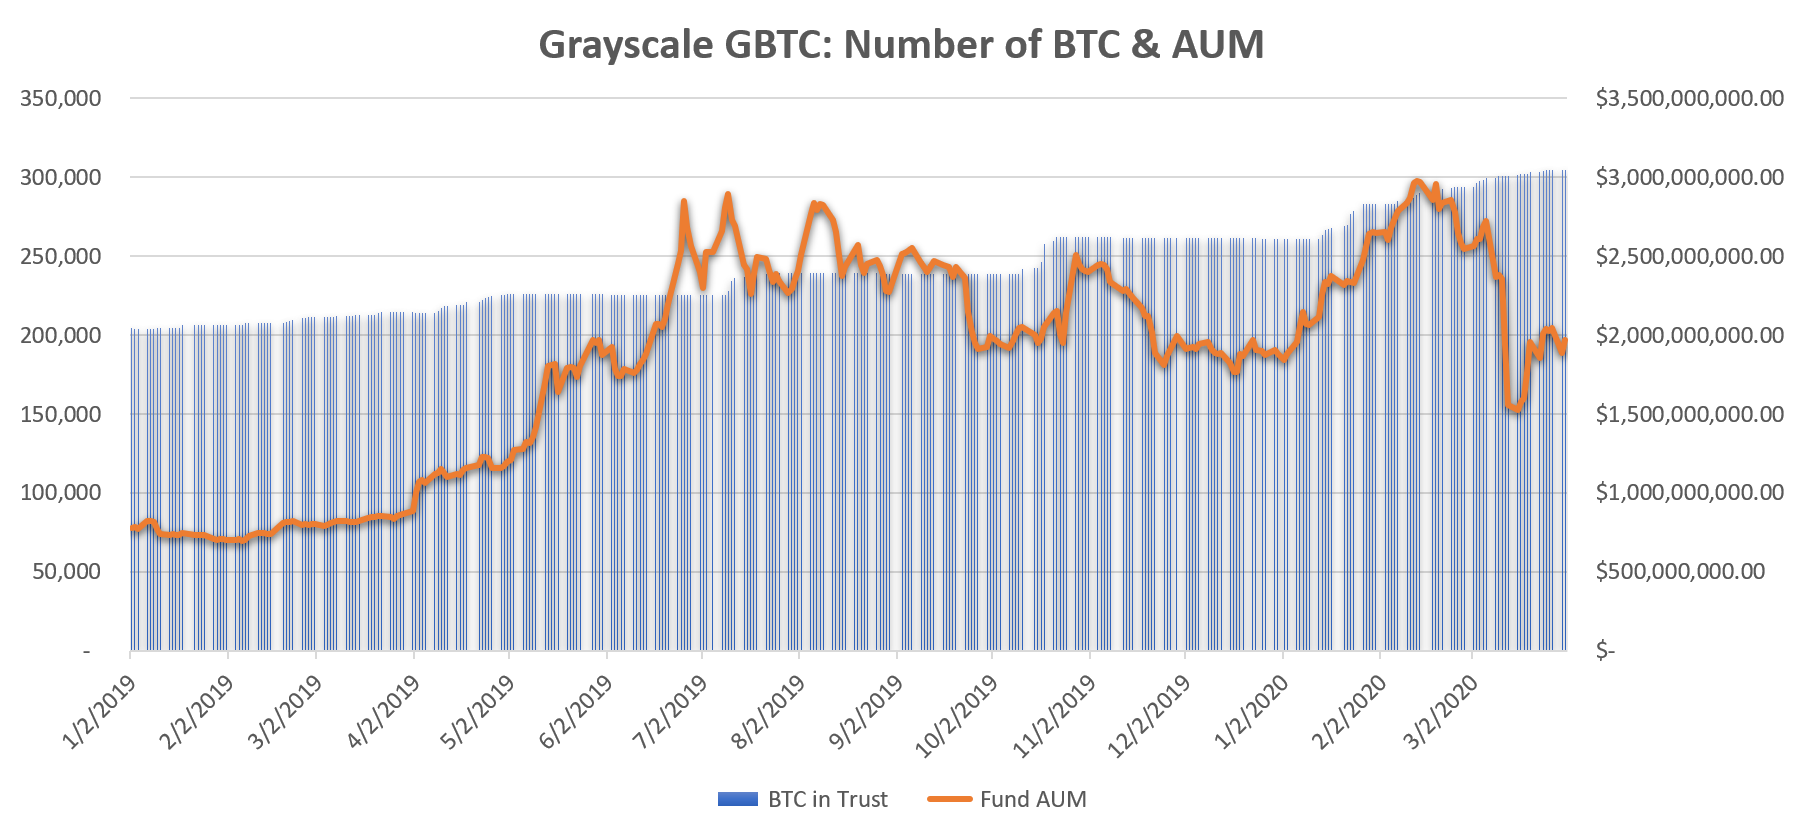 GBTC BTC Holding & Assets Under Management. Source: Cointelegraph, Grayscale.